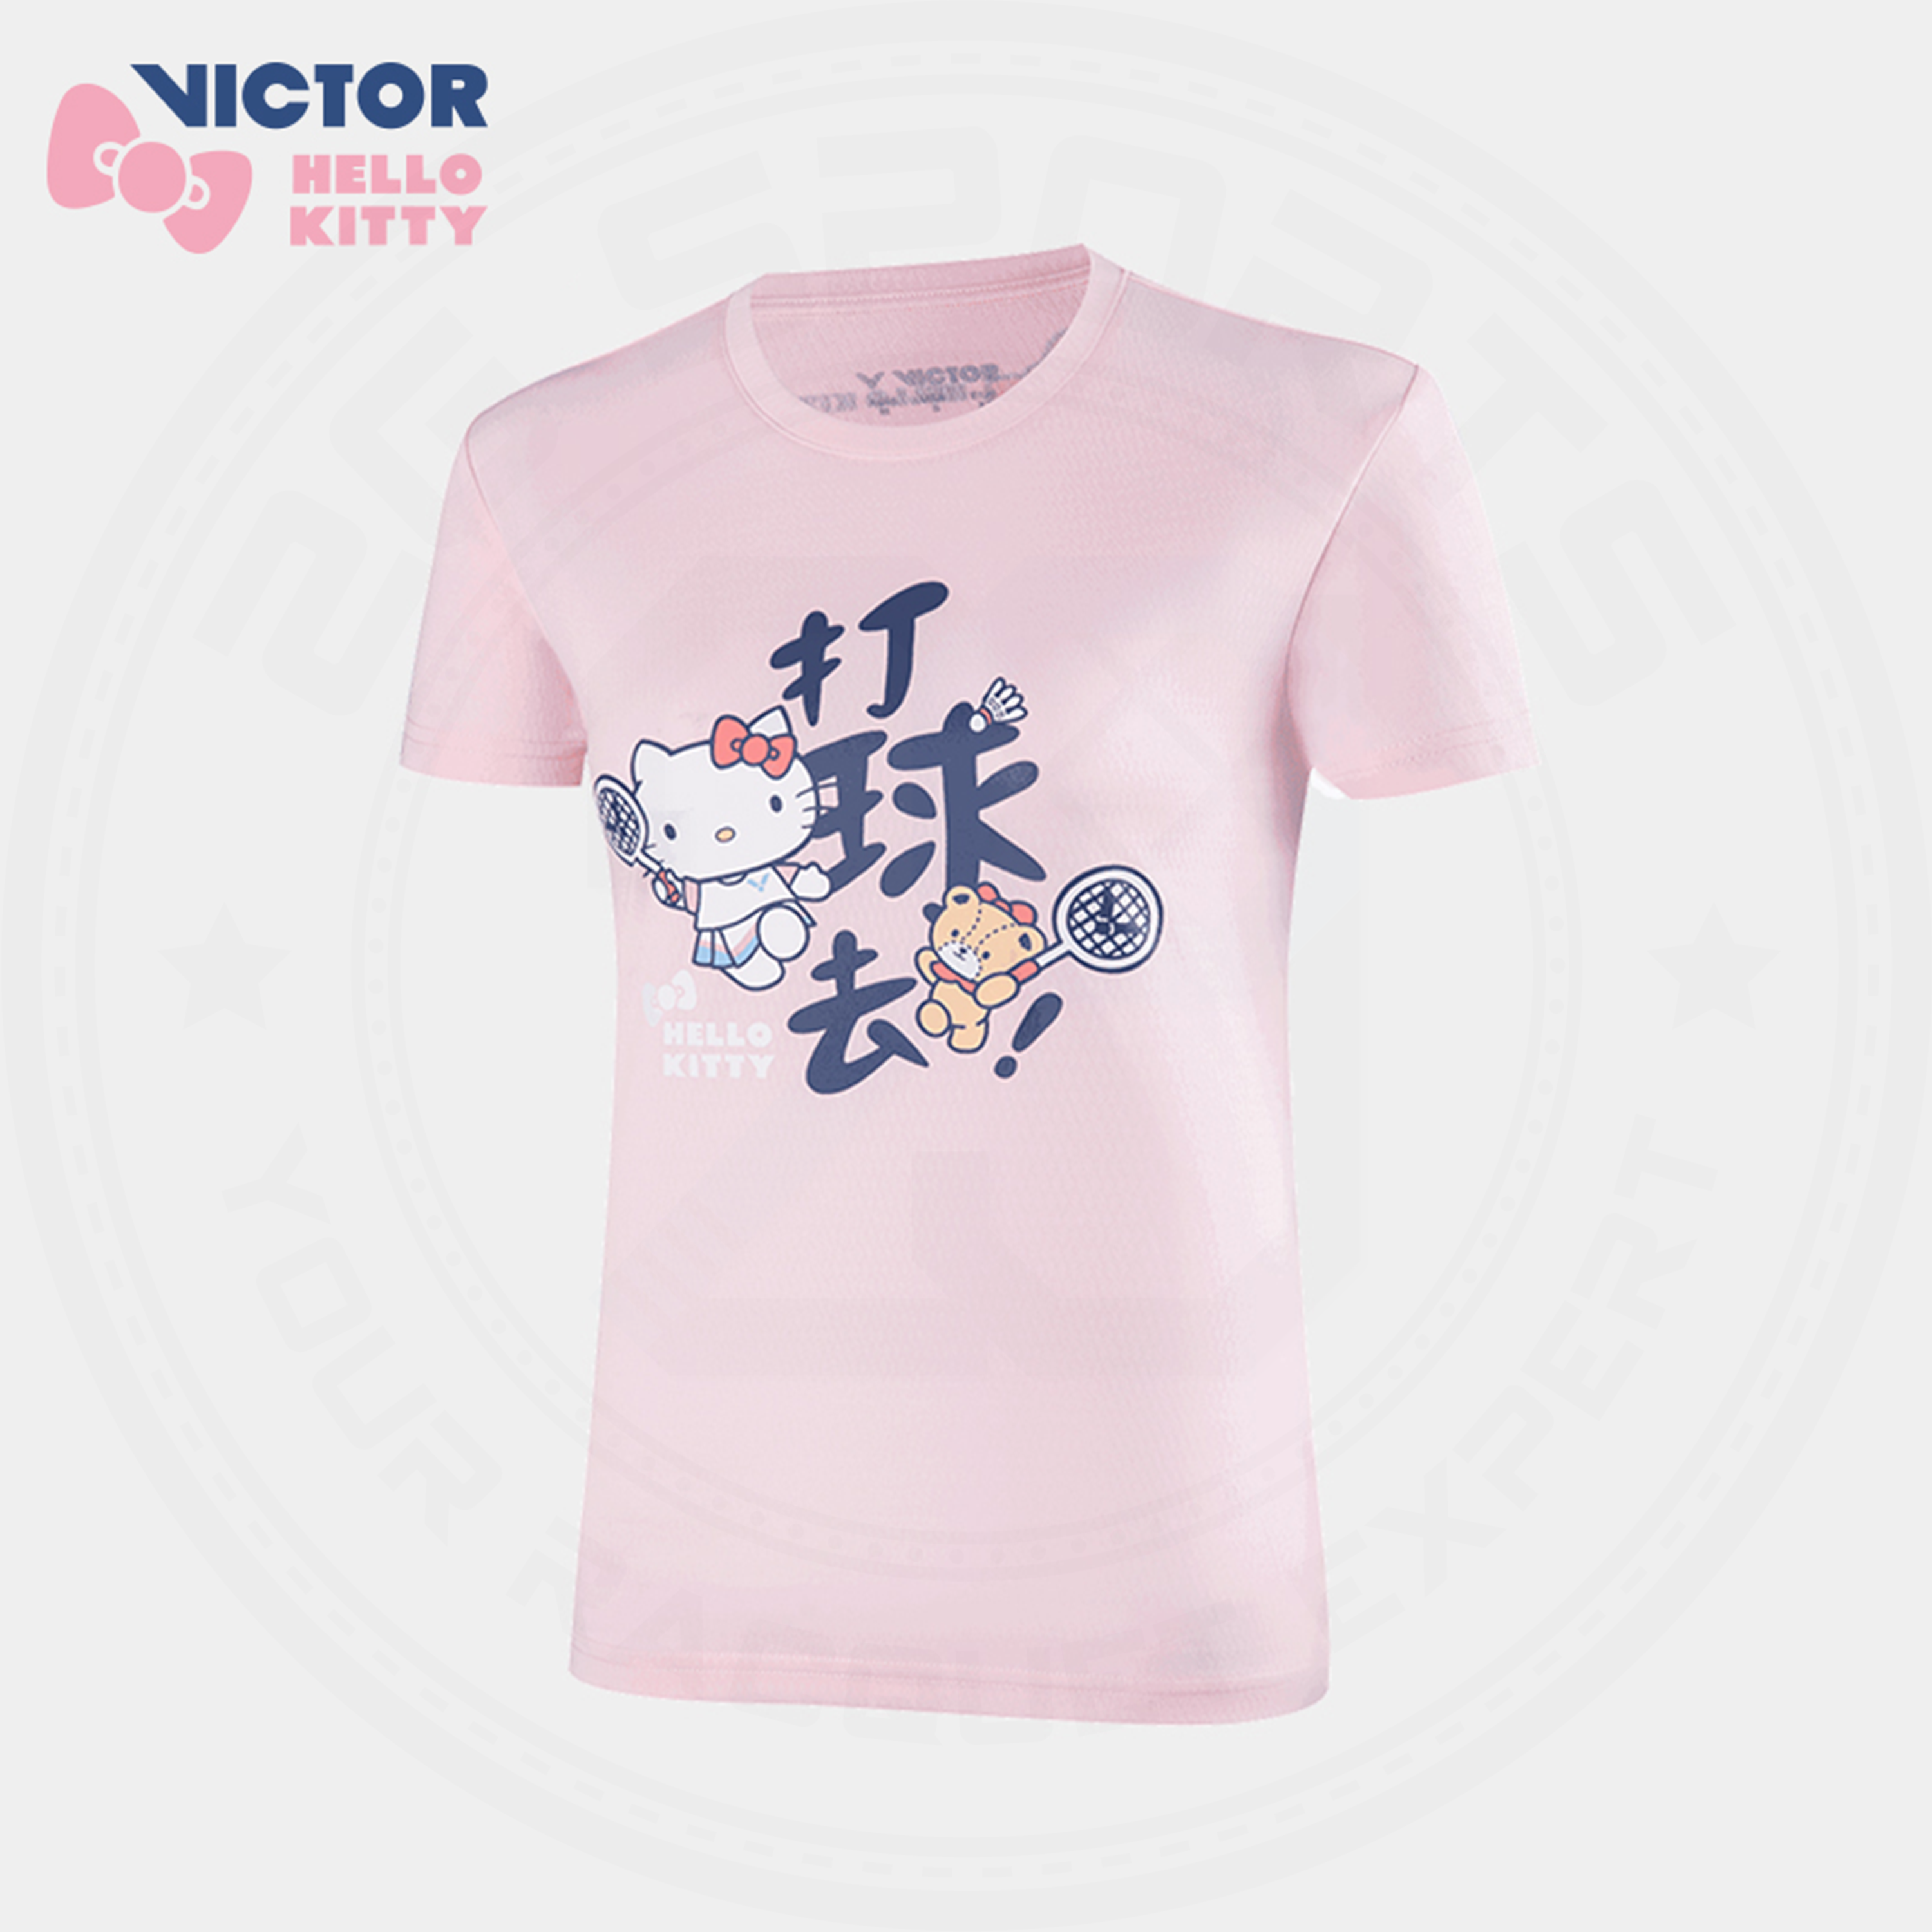 Victor X Hello Kitty T-KT202 Sport Shirt Pink WOMEN'S